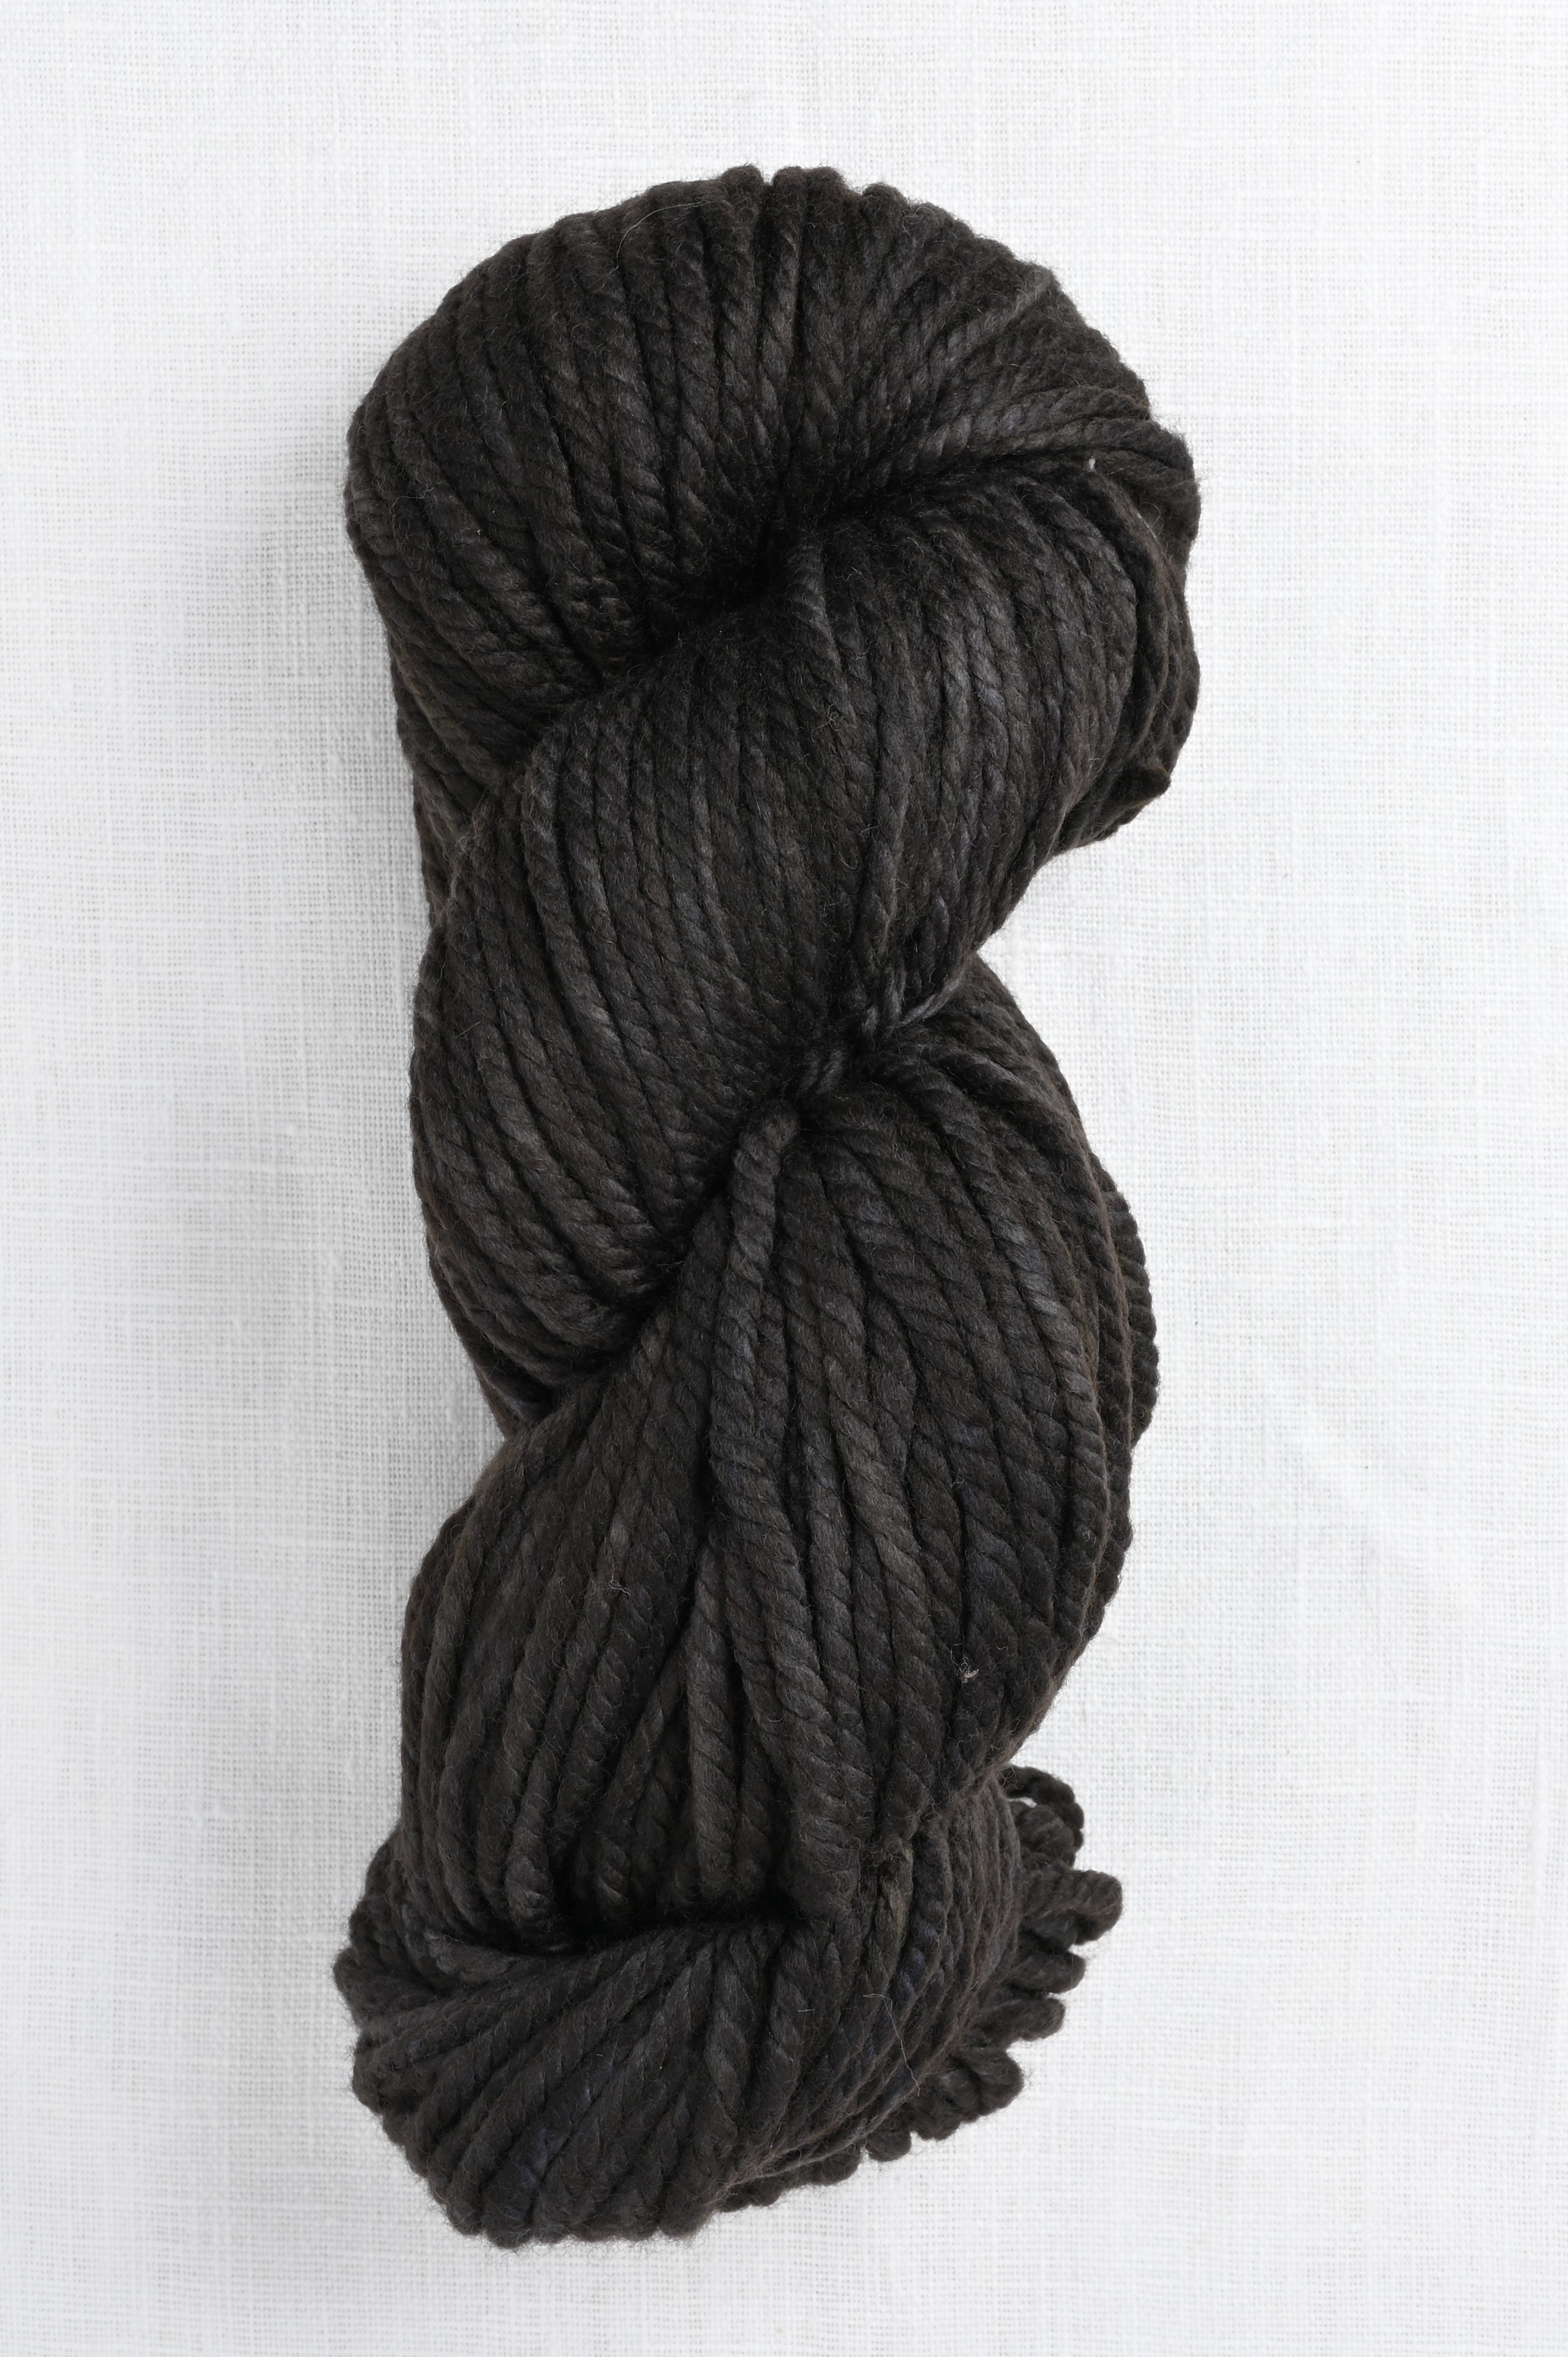 031 - Gordita black chunky ecological merino wool